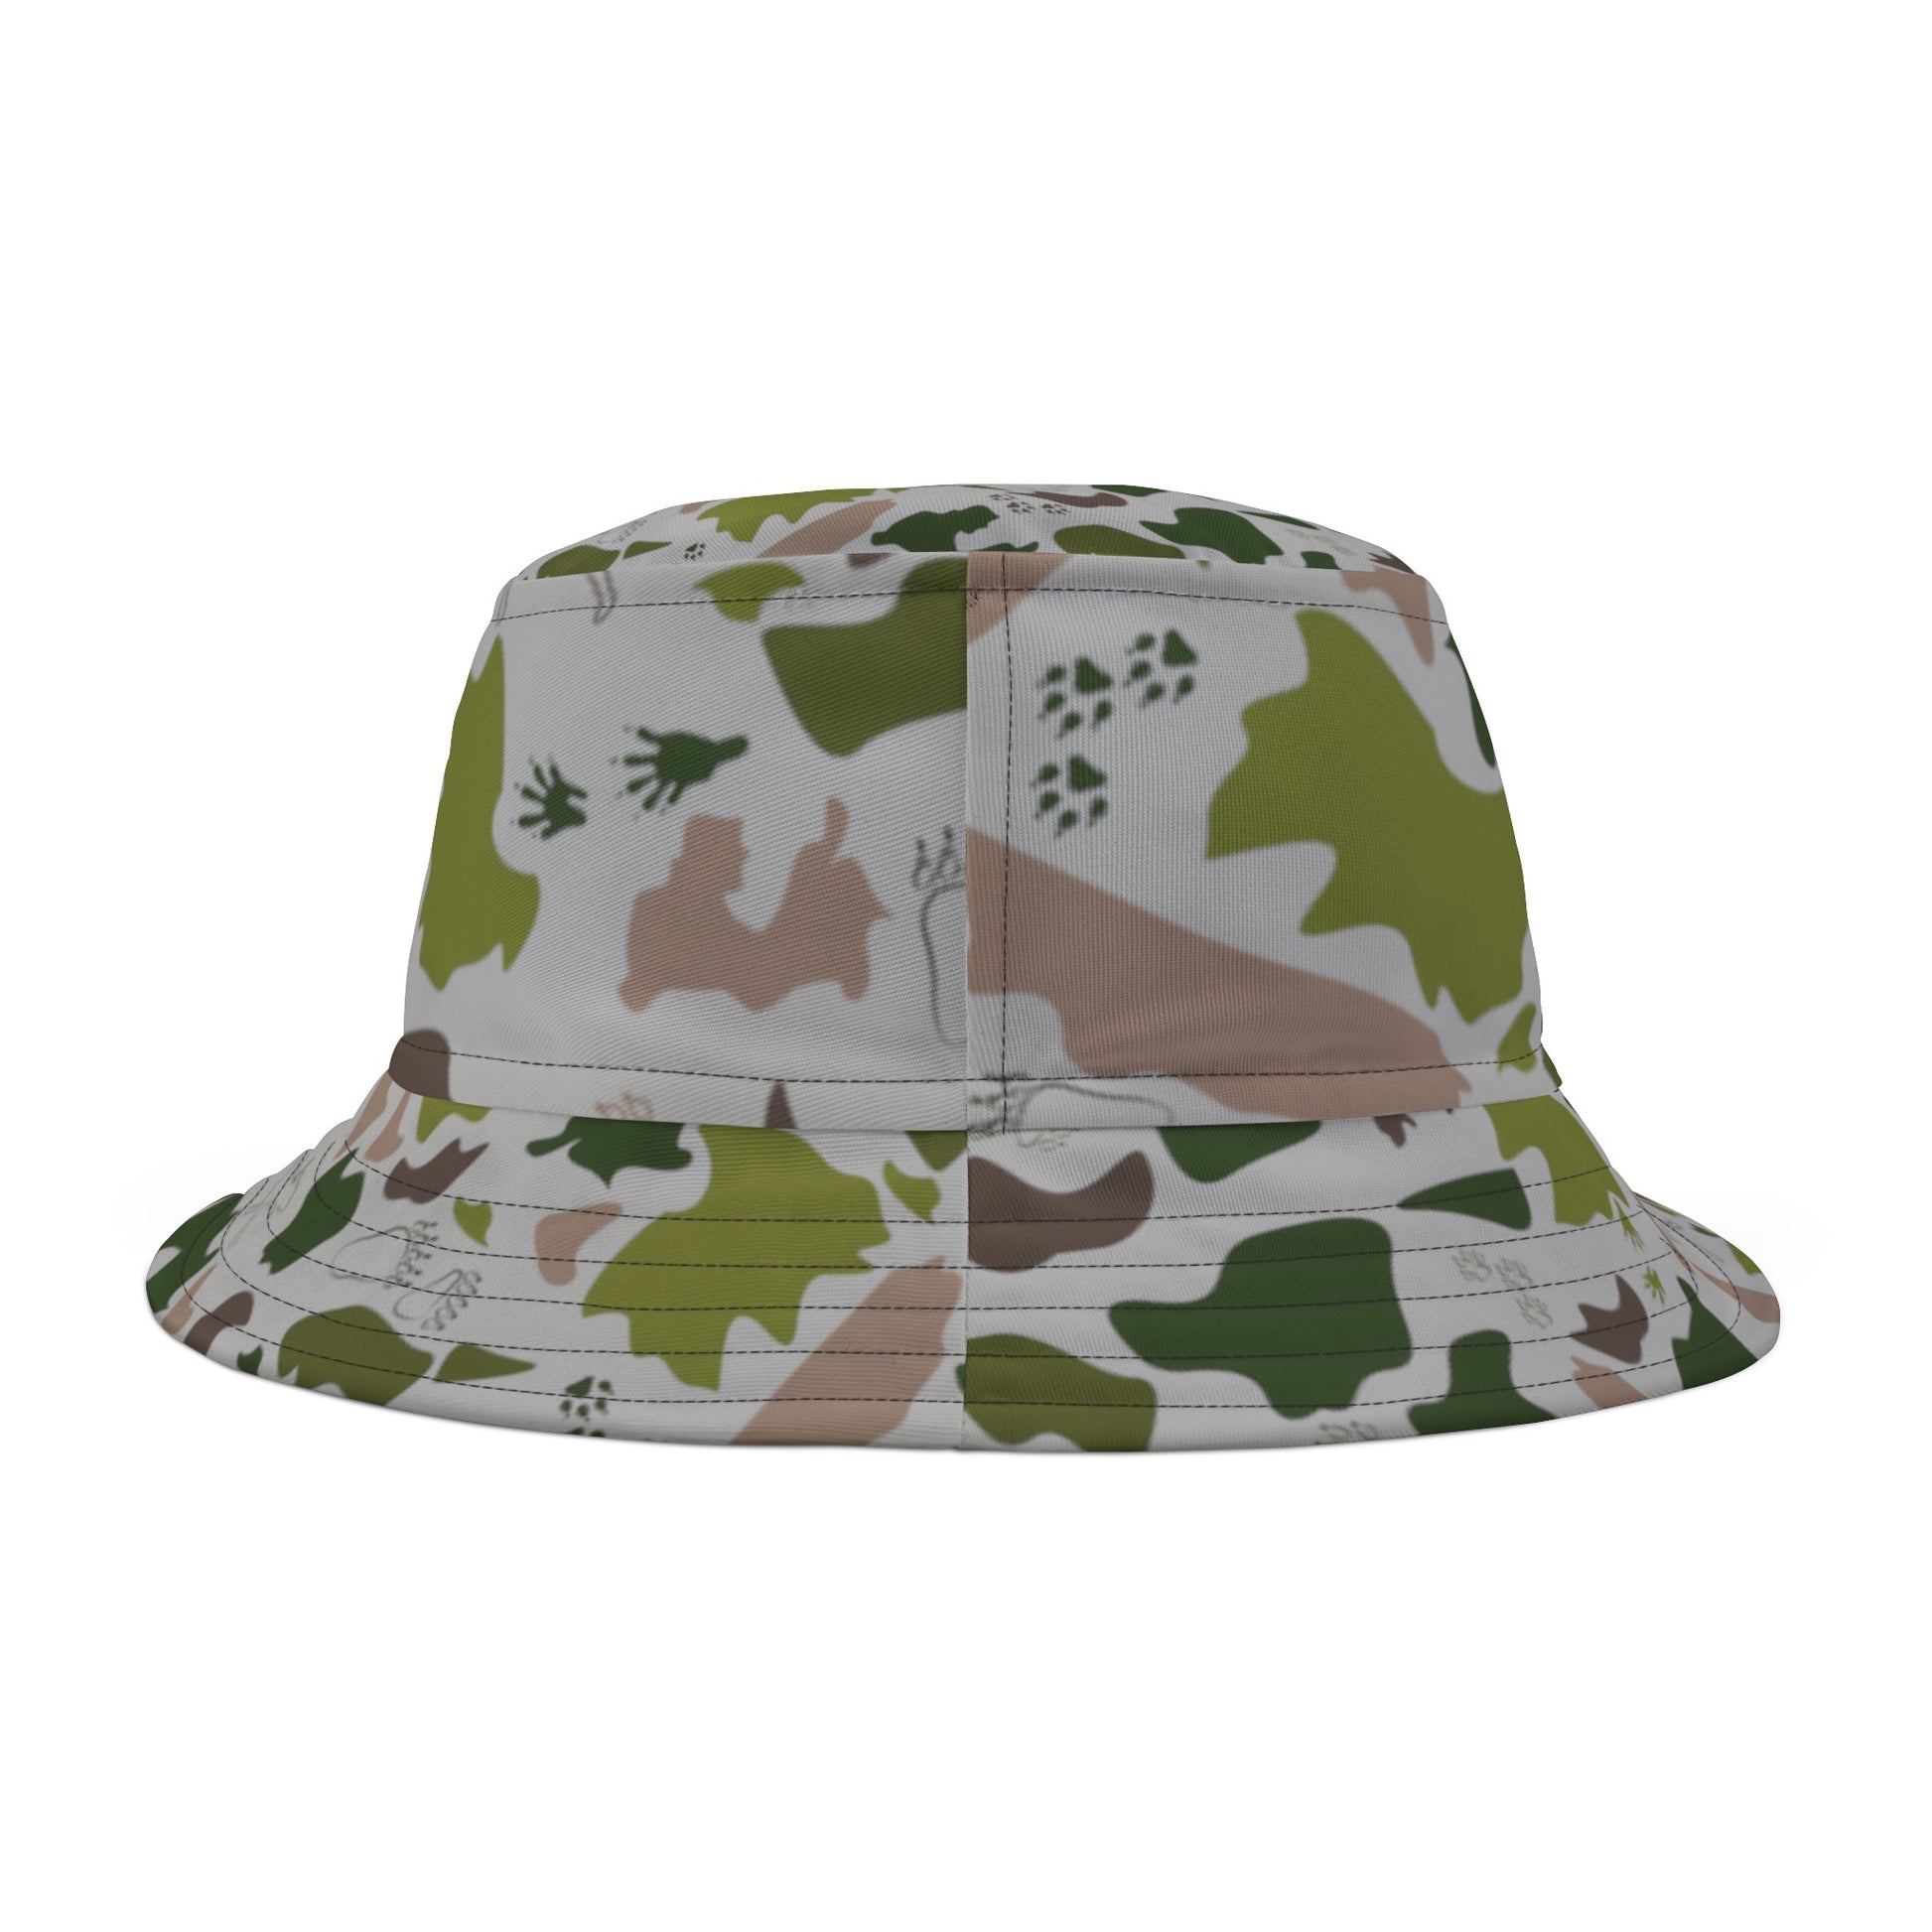 Bucket camouflage hat